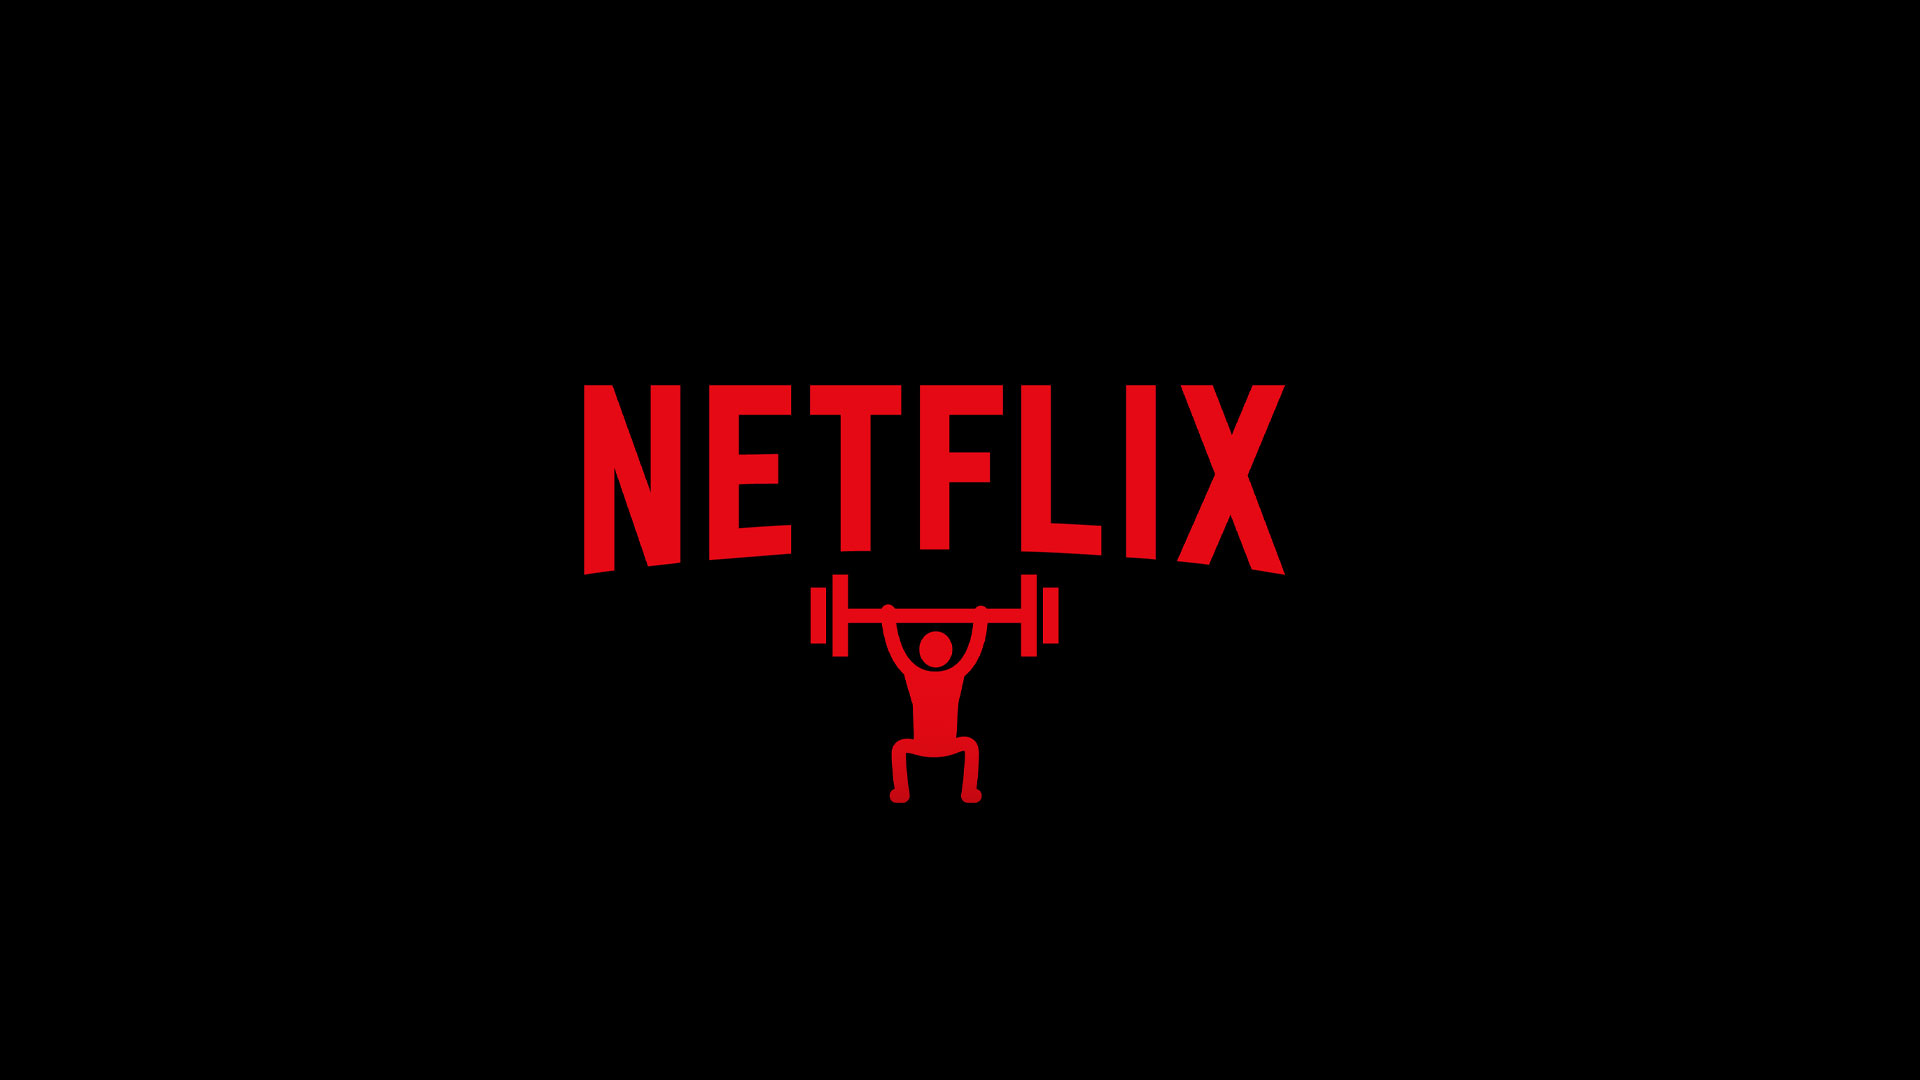 Netflix, add fitness programs please